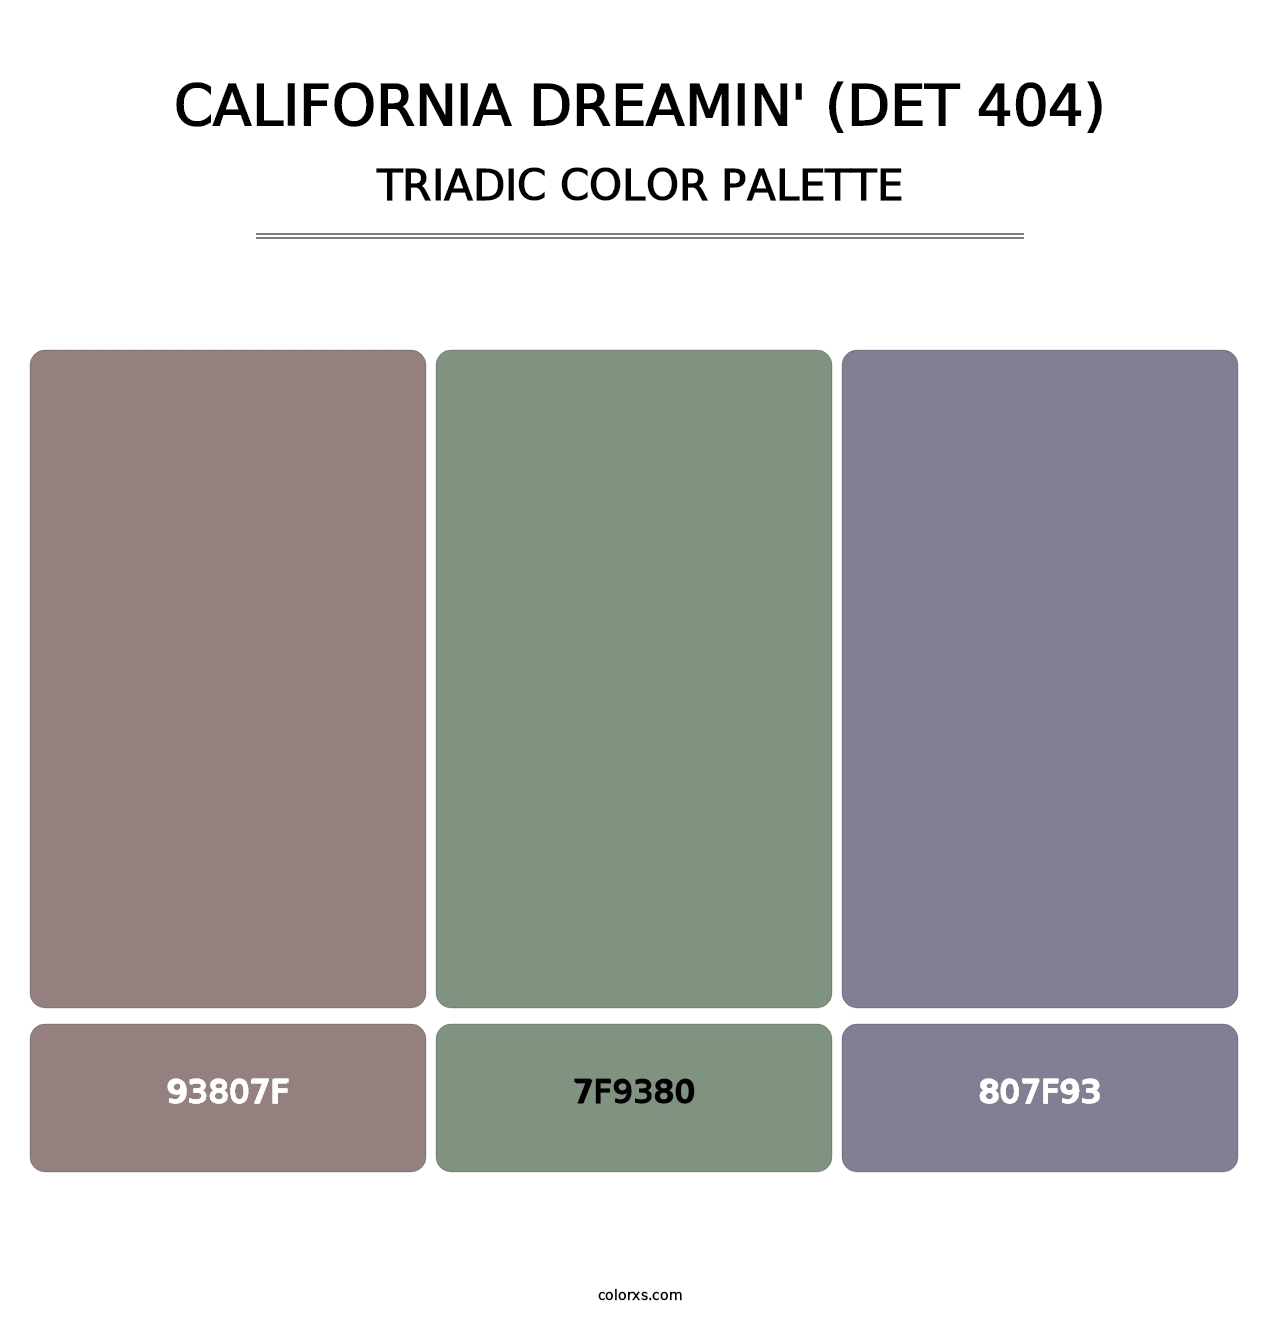 California Dreamin' (DET 404) - Triadic Color Palette